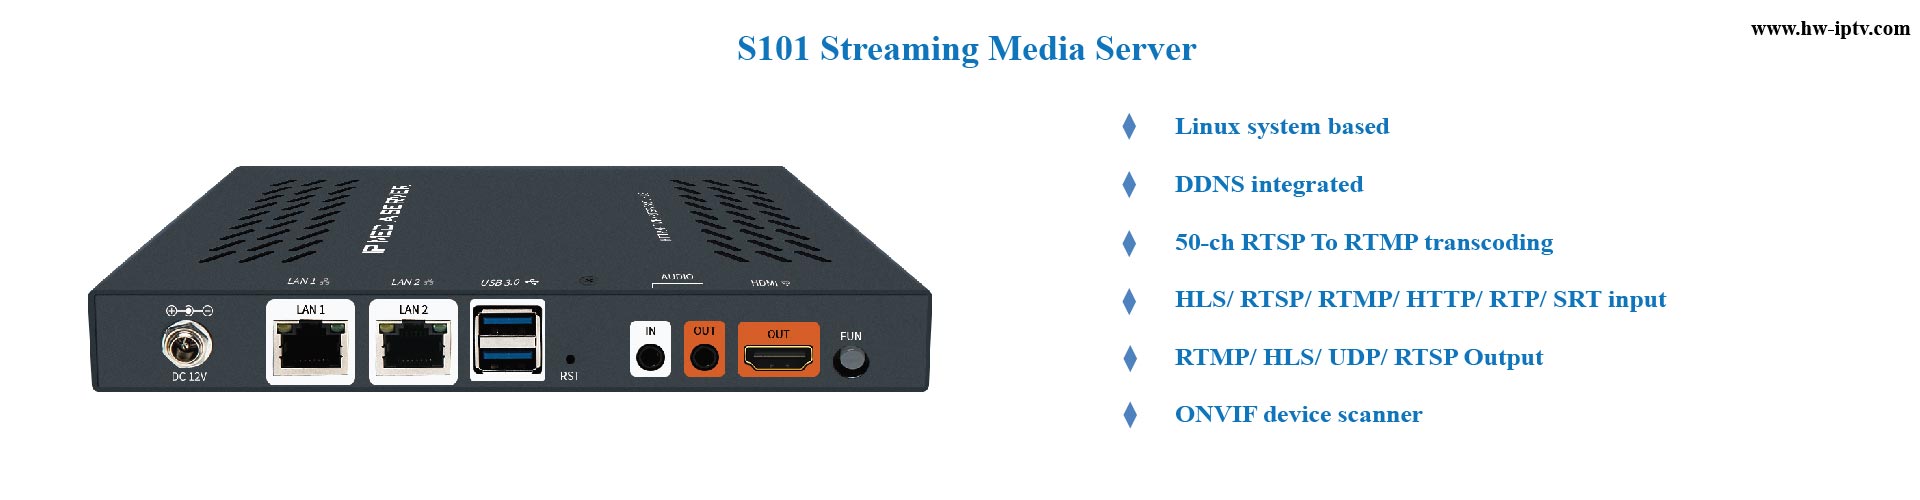 Streaming media server 